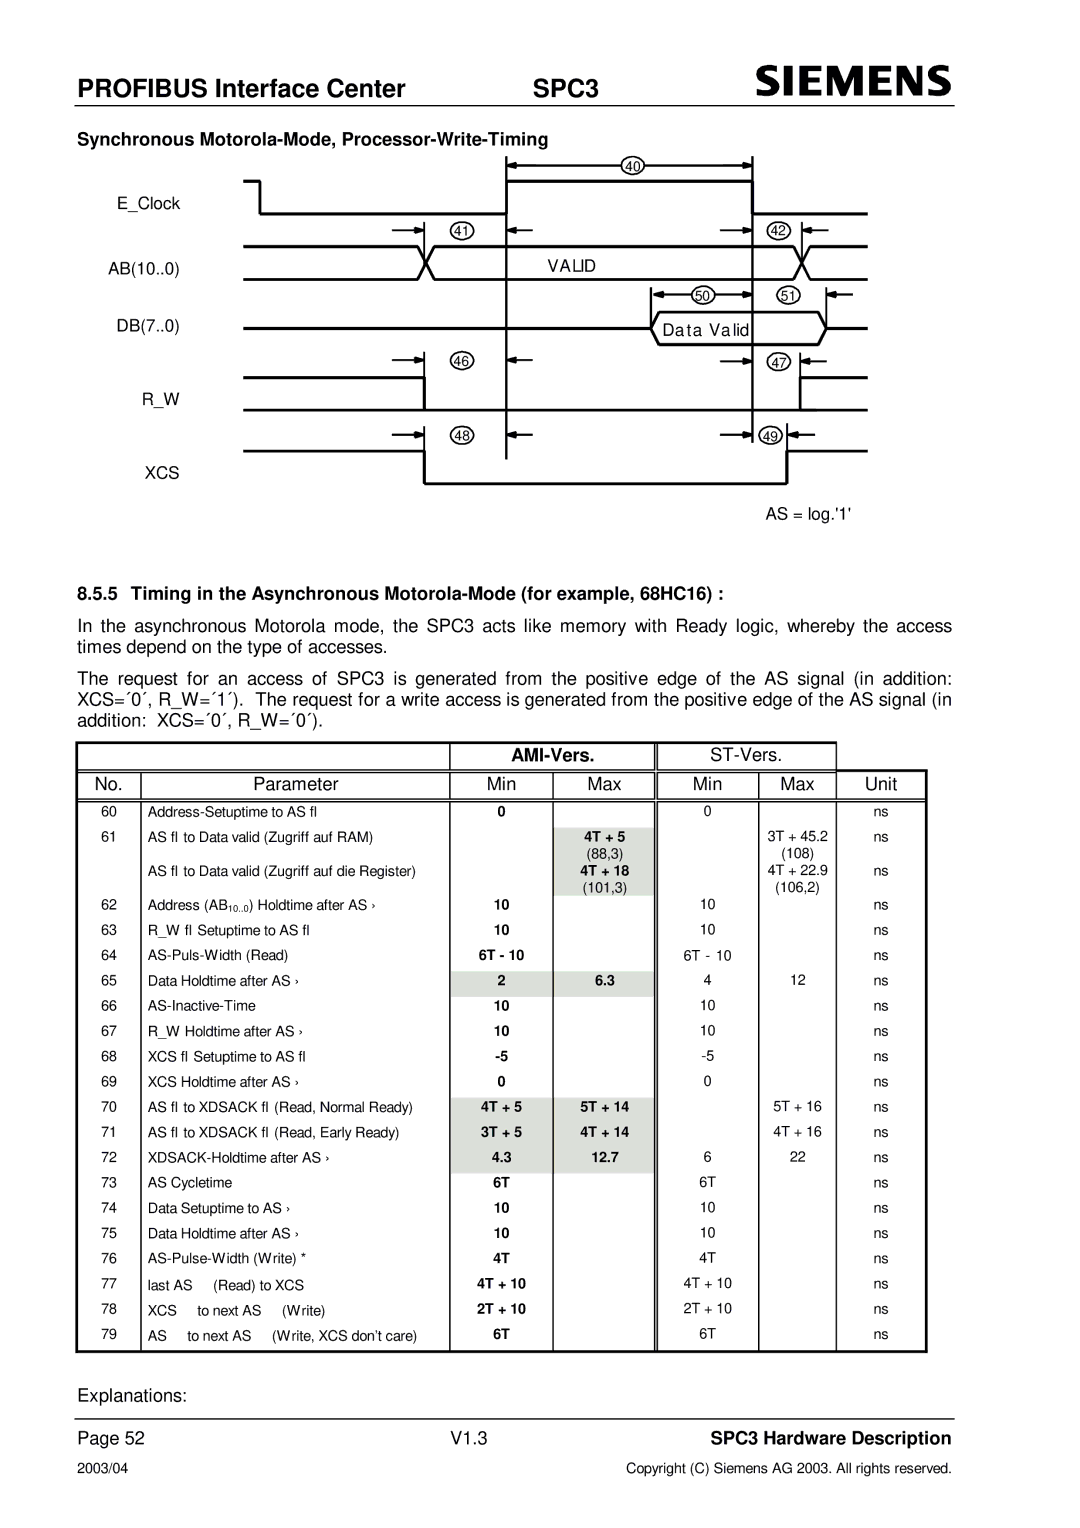 Siemens SPC3 manual Synchronous Motorola-Mode, Processor-Write-Timing 